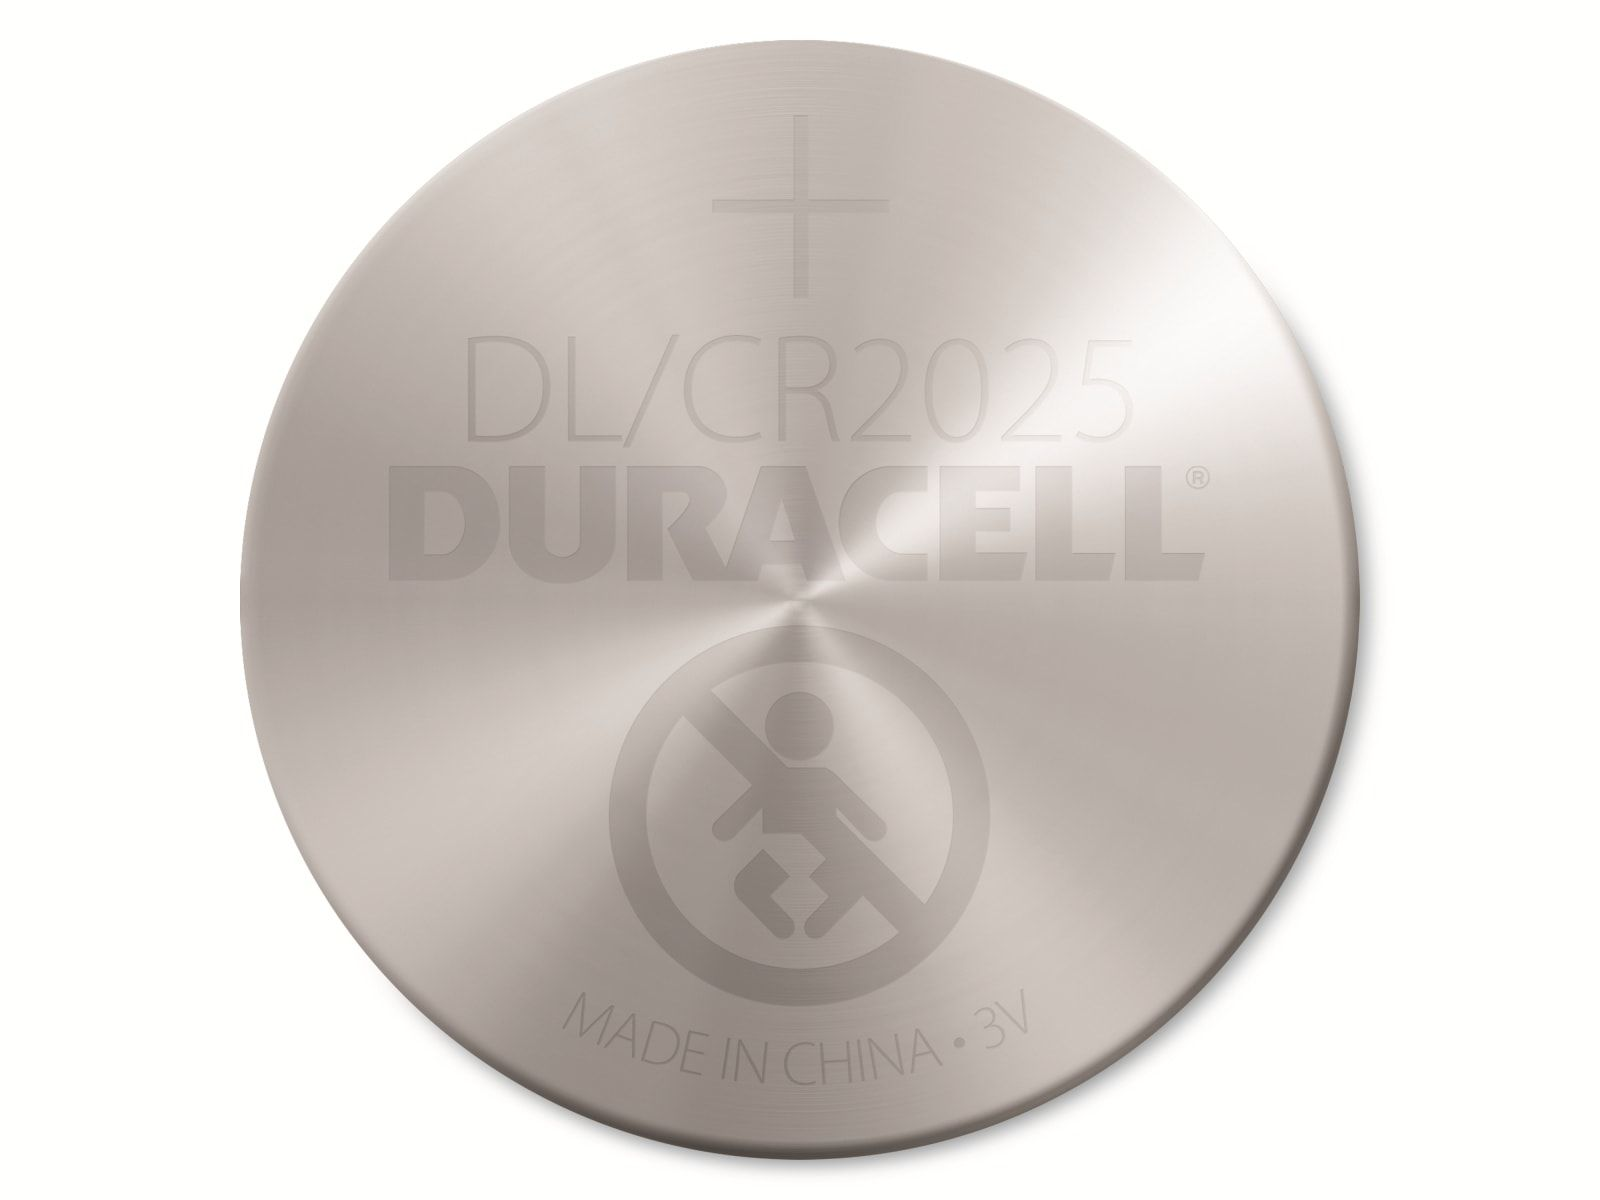 DURACELL Lithium-Knopfzelle CR2025, Batterien 3V, Stück 5 Lithium